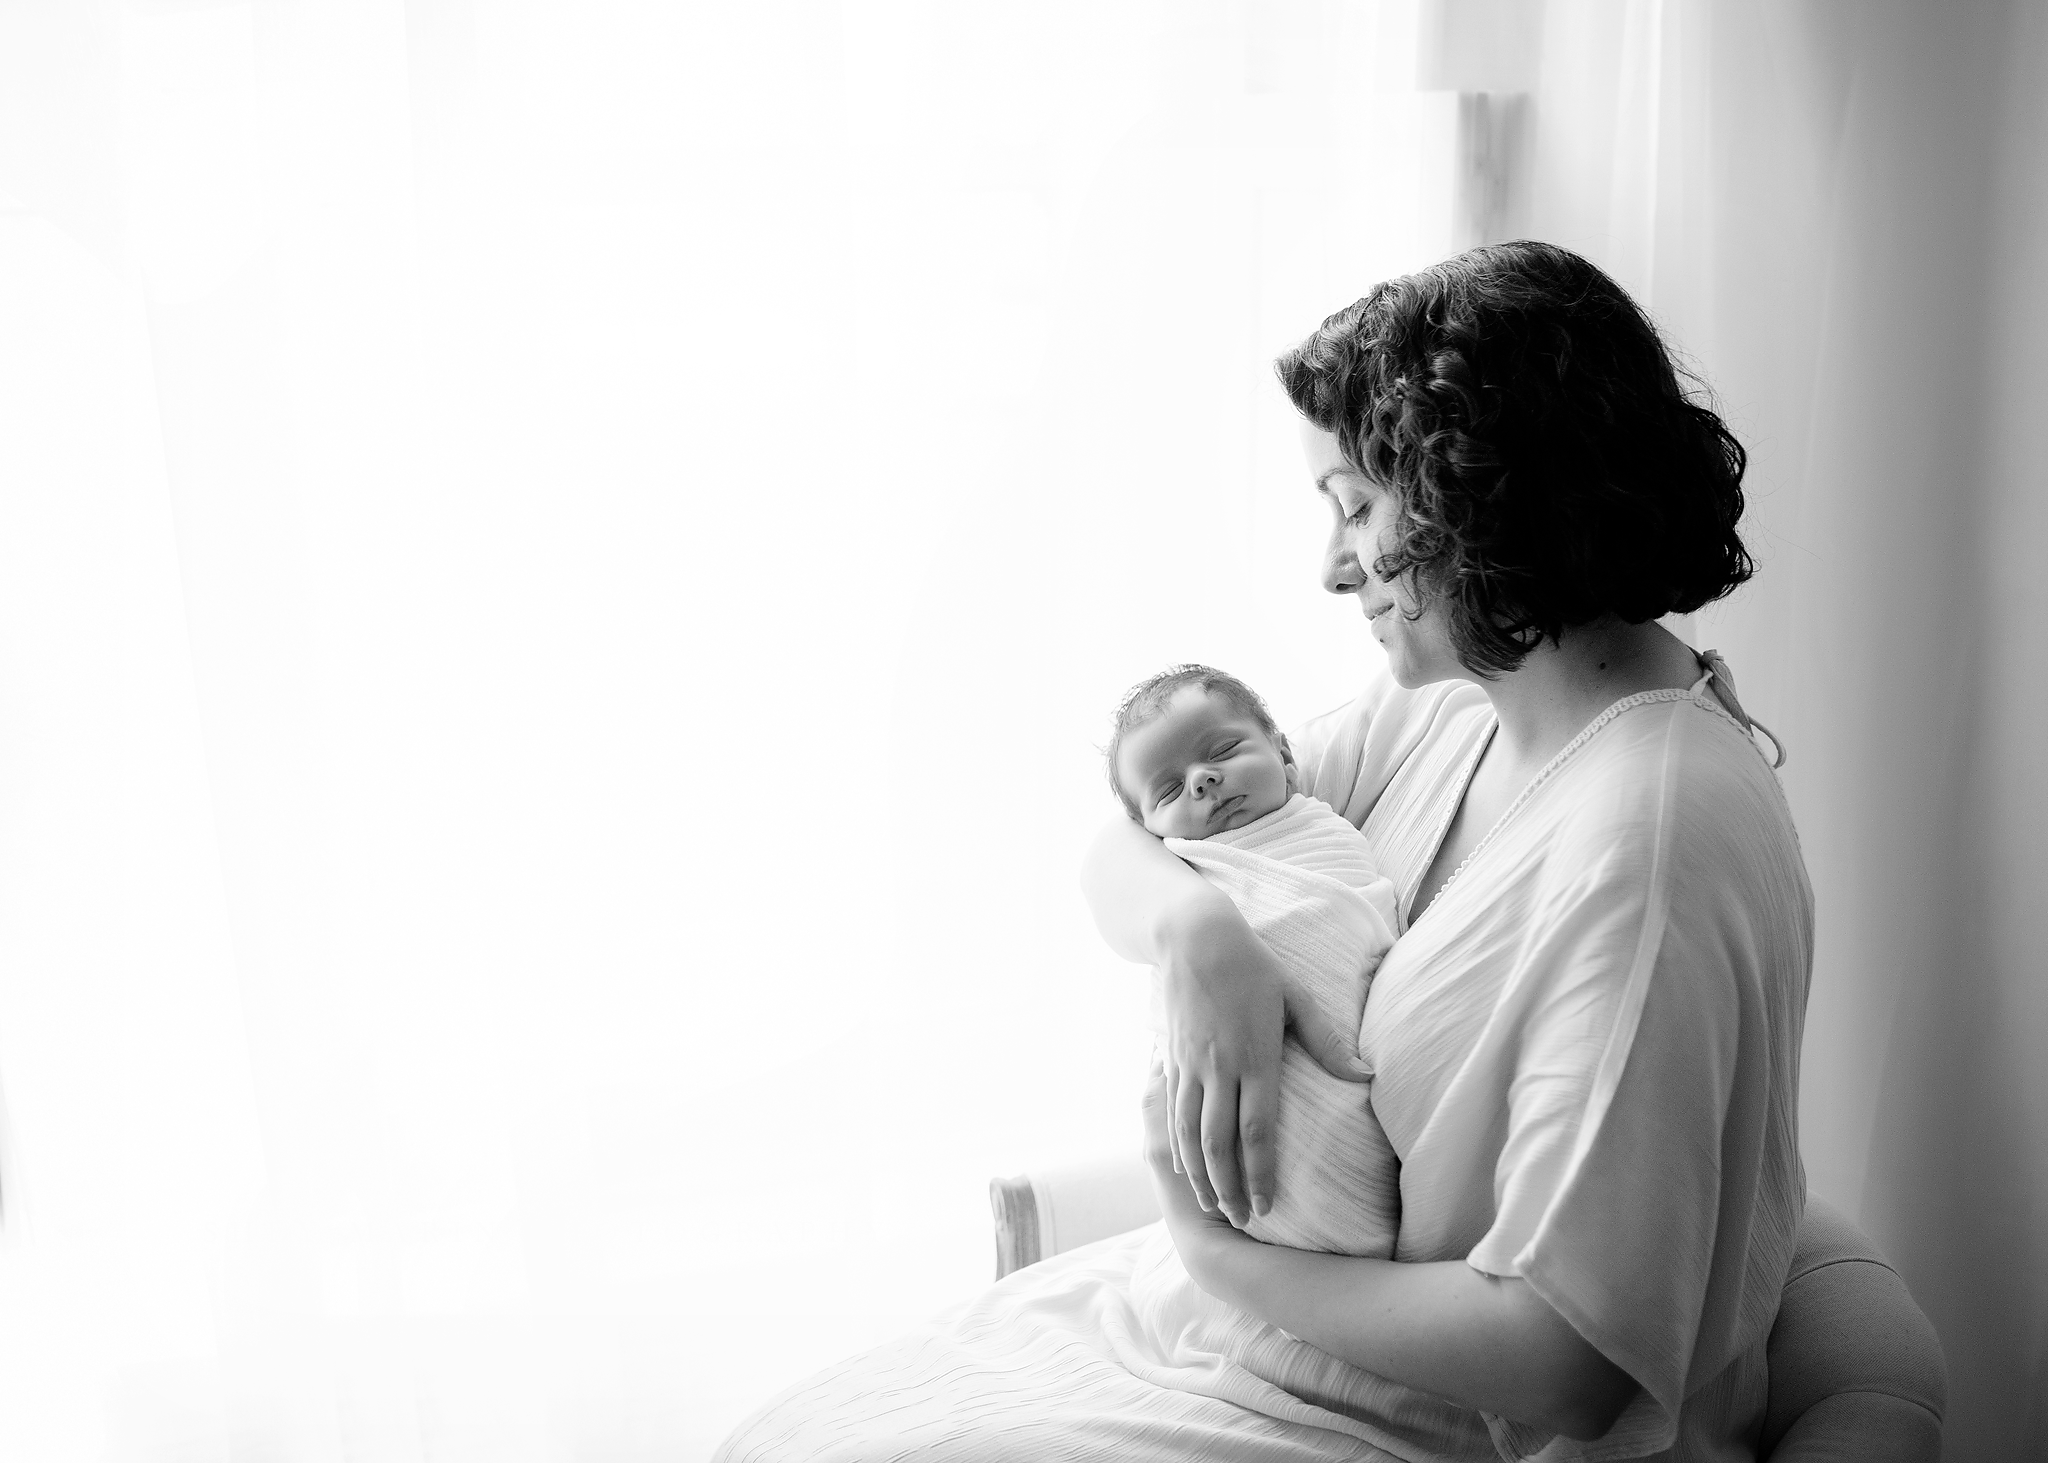 Washington DC newborn photographer